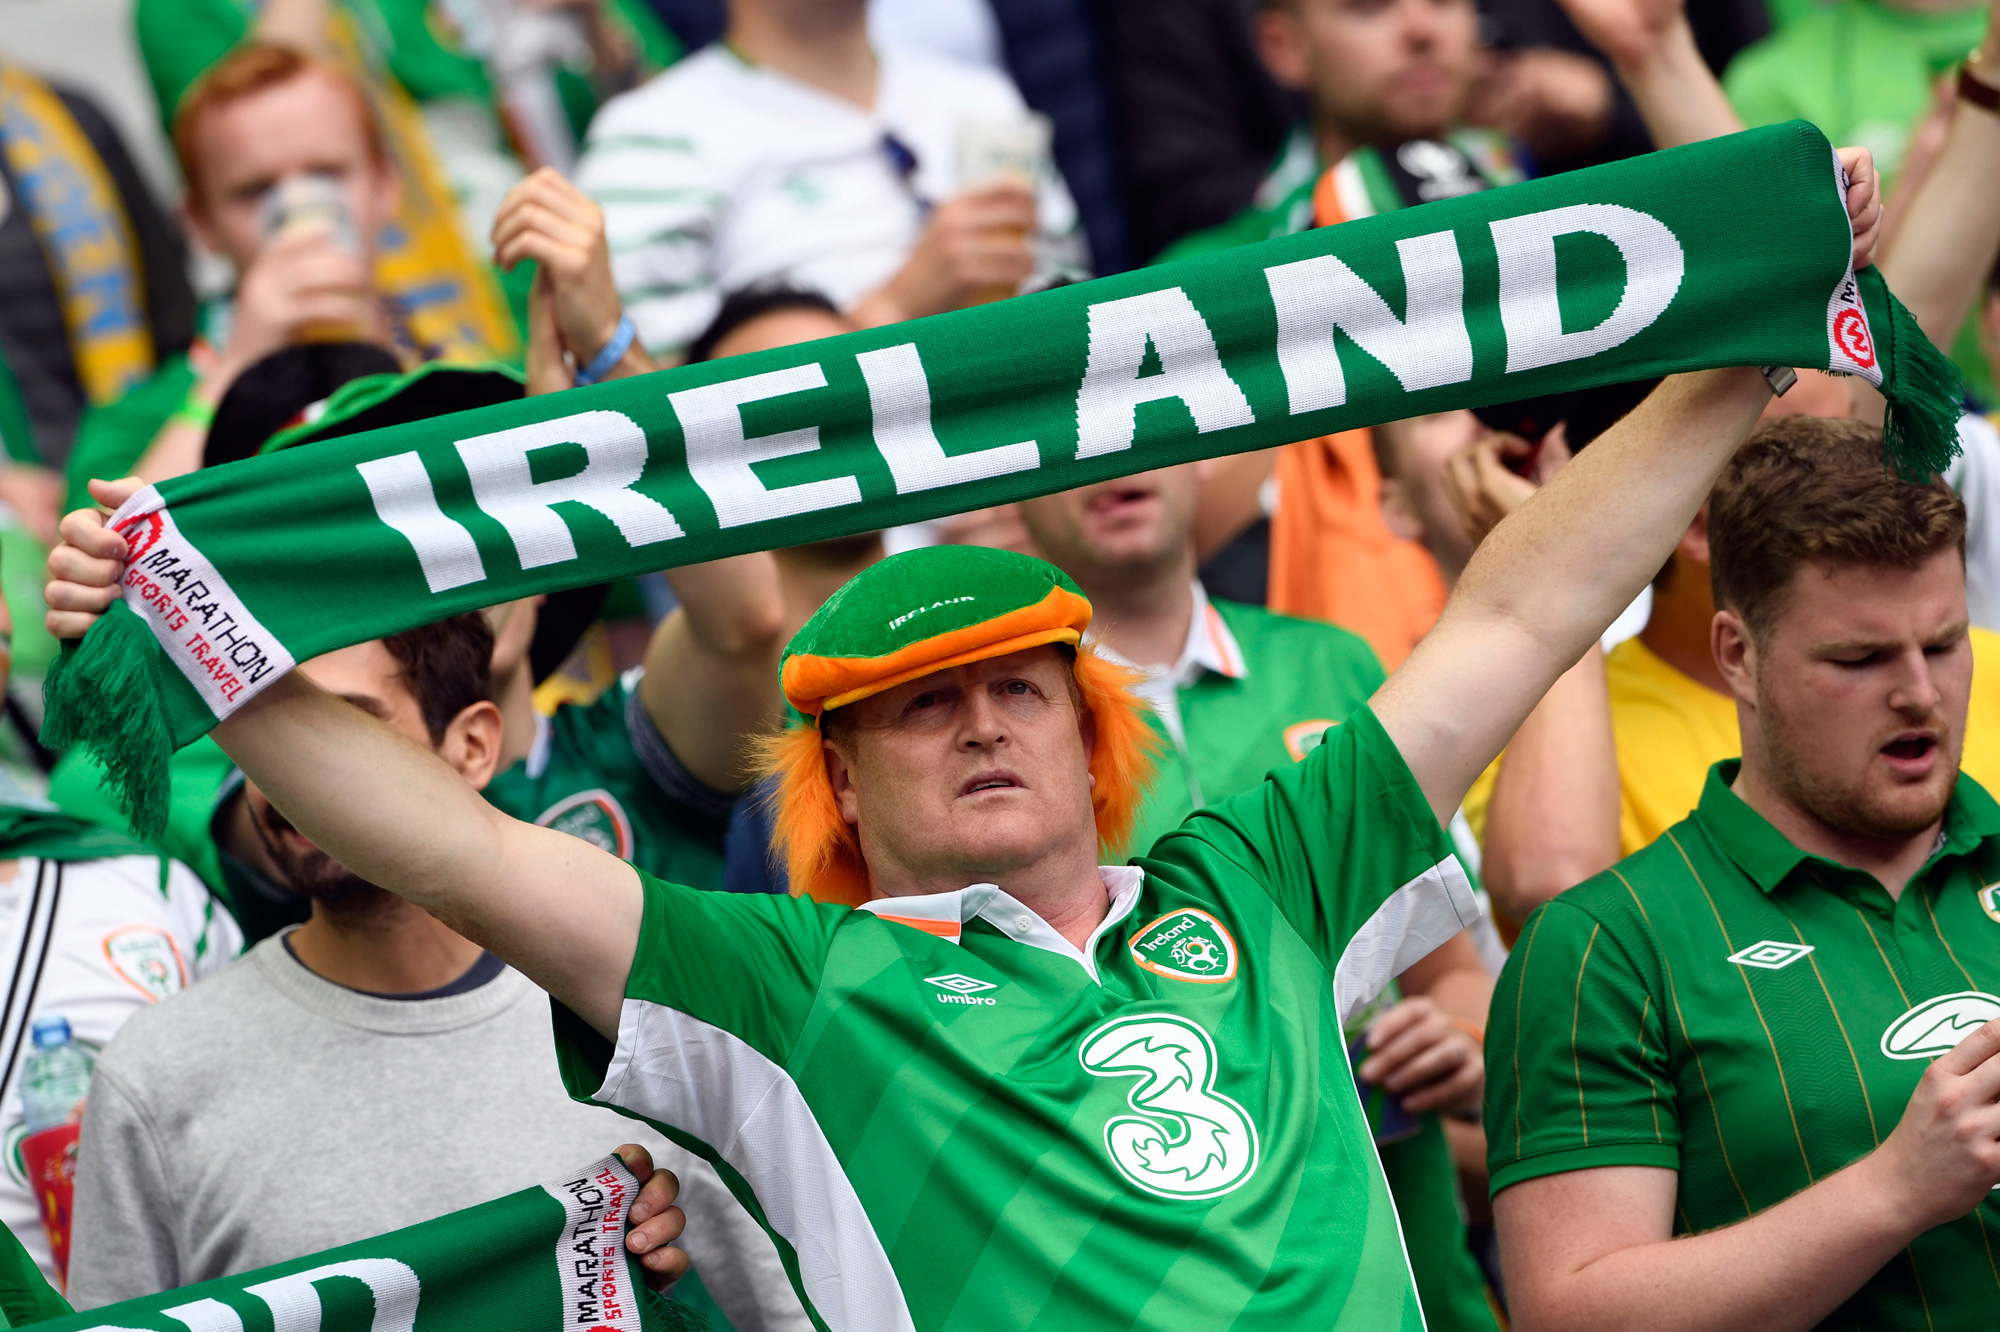 Irish soccer stars in hotel orgy